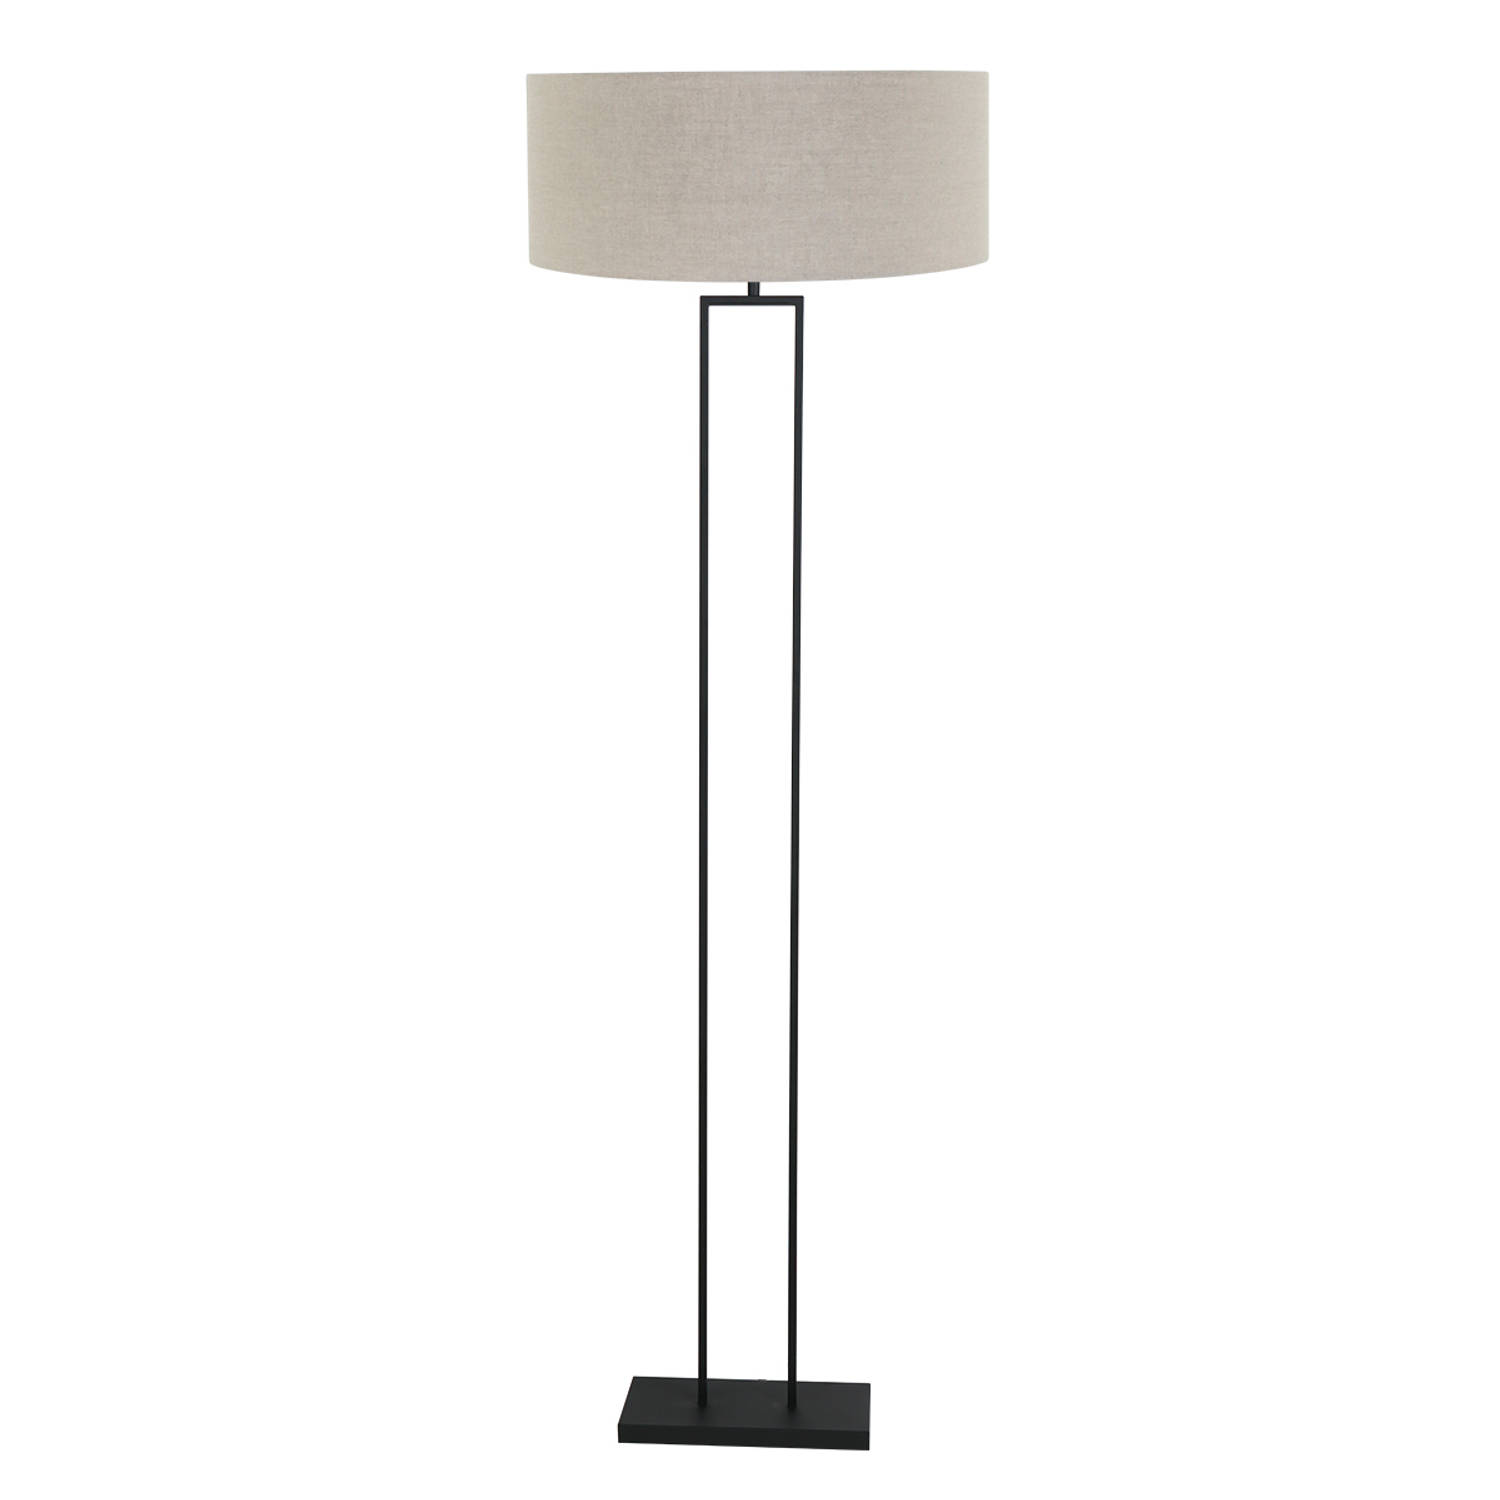 Vloerlamp Stang | 1-lichts | grijs / zwart | E27 grote fitting | modern / industrieel ontwerp | woonkamer / studeerkamer